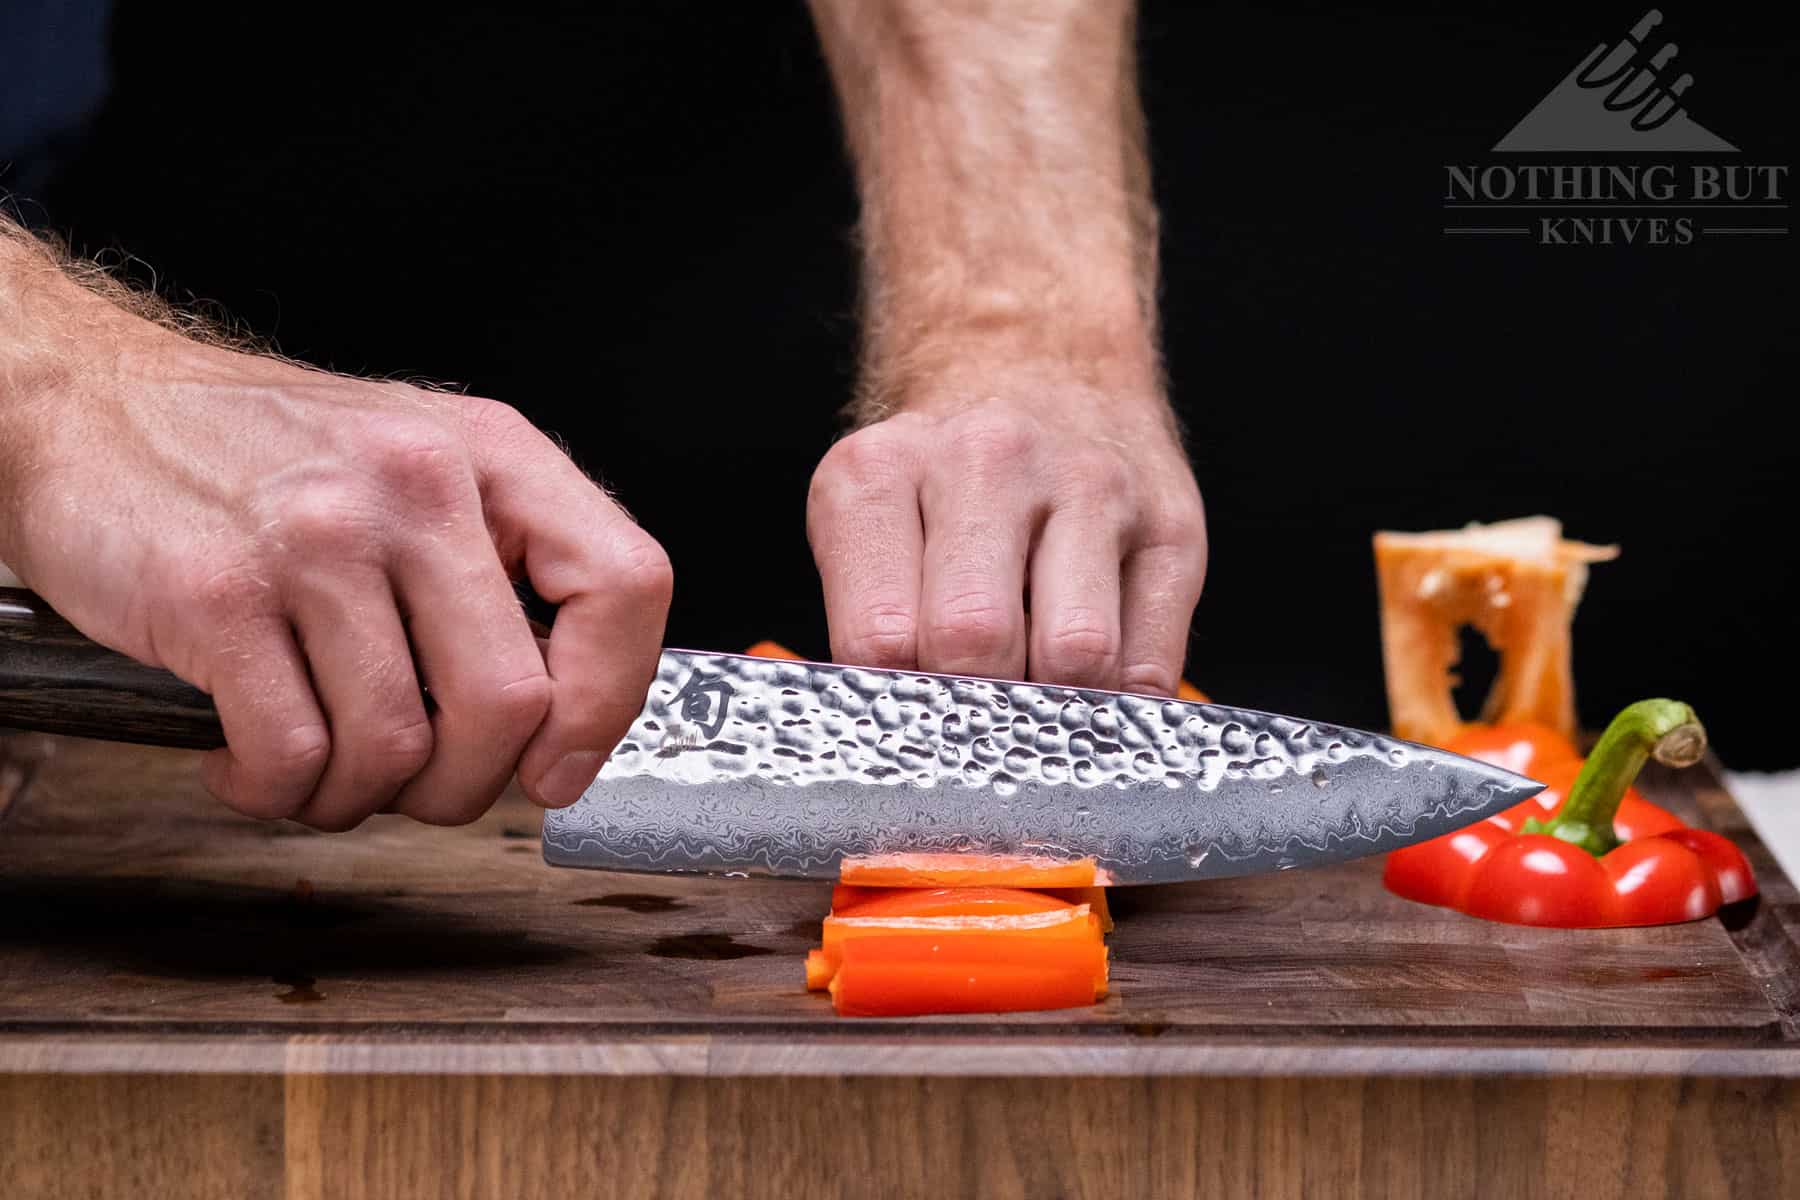 Shun Classic 6 Chef's Knife + Reviews